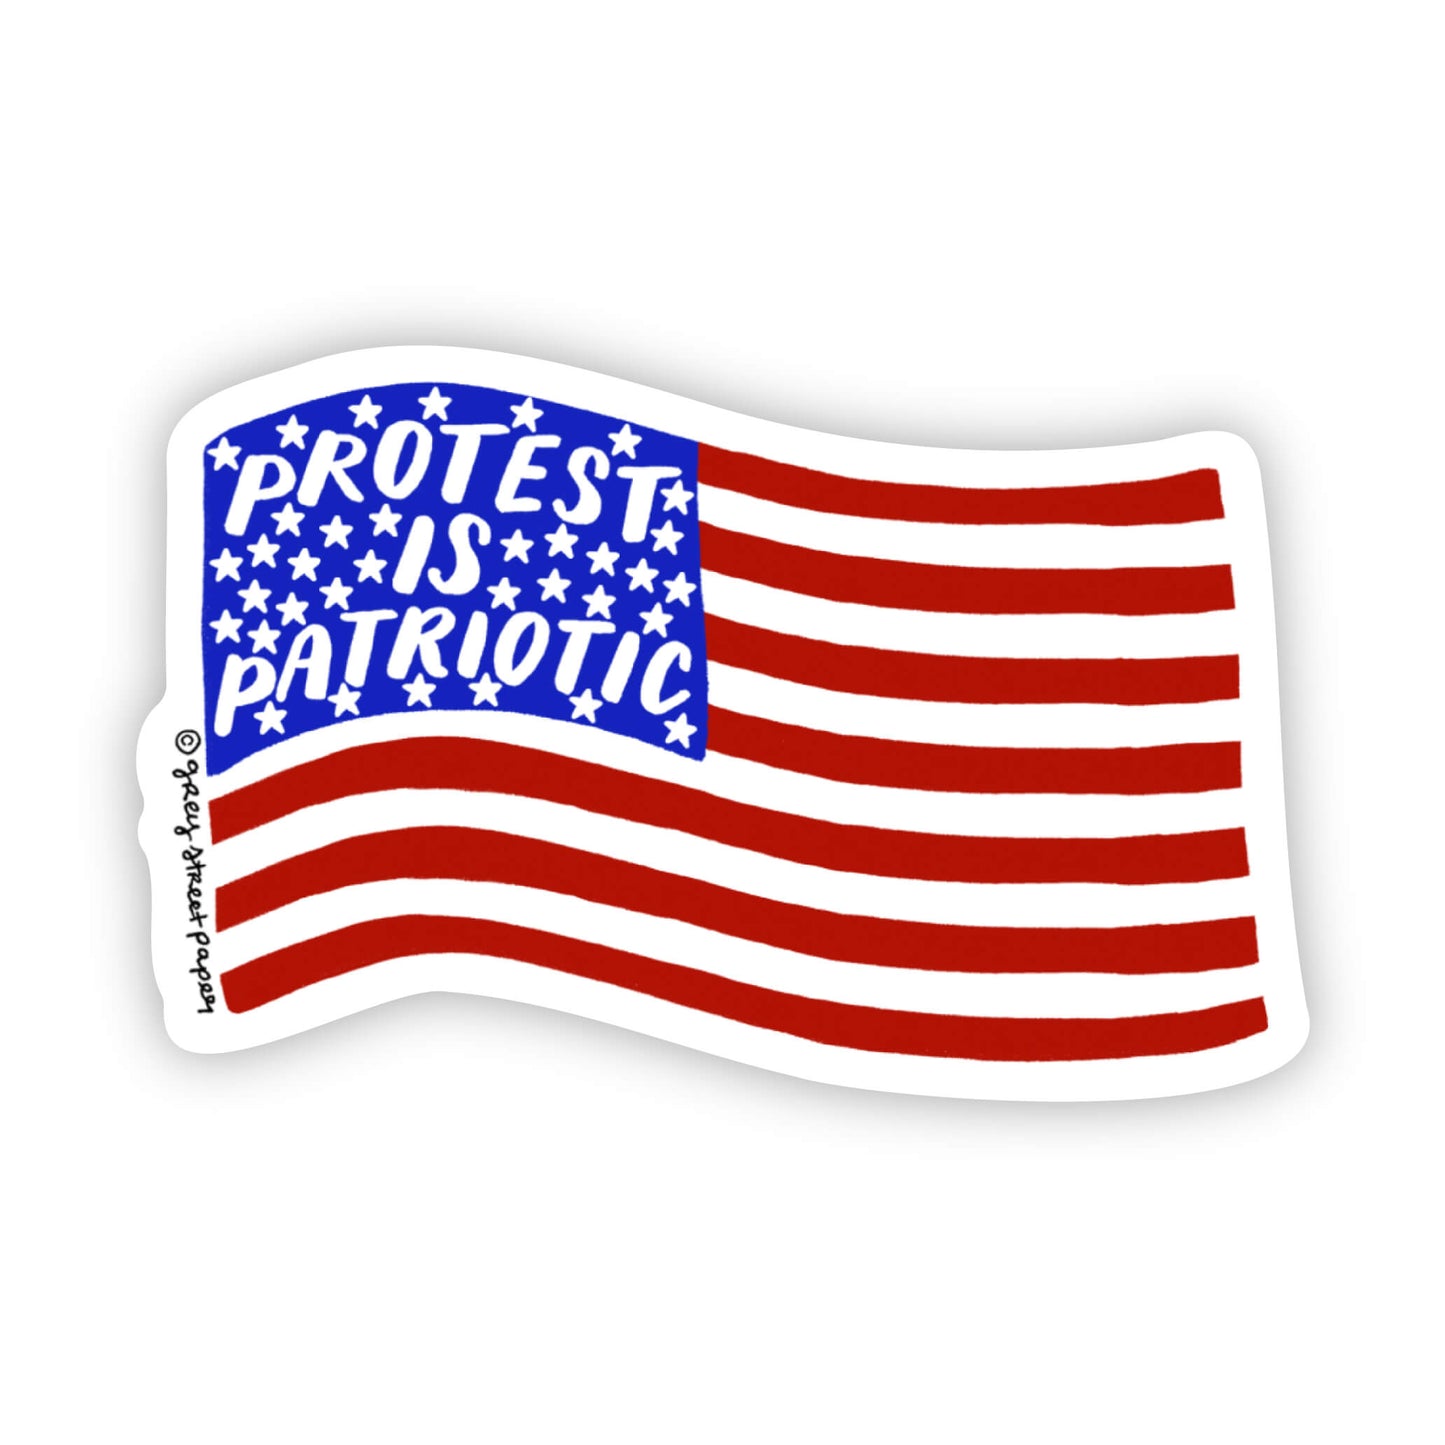 Protest is Patriotic Sticker